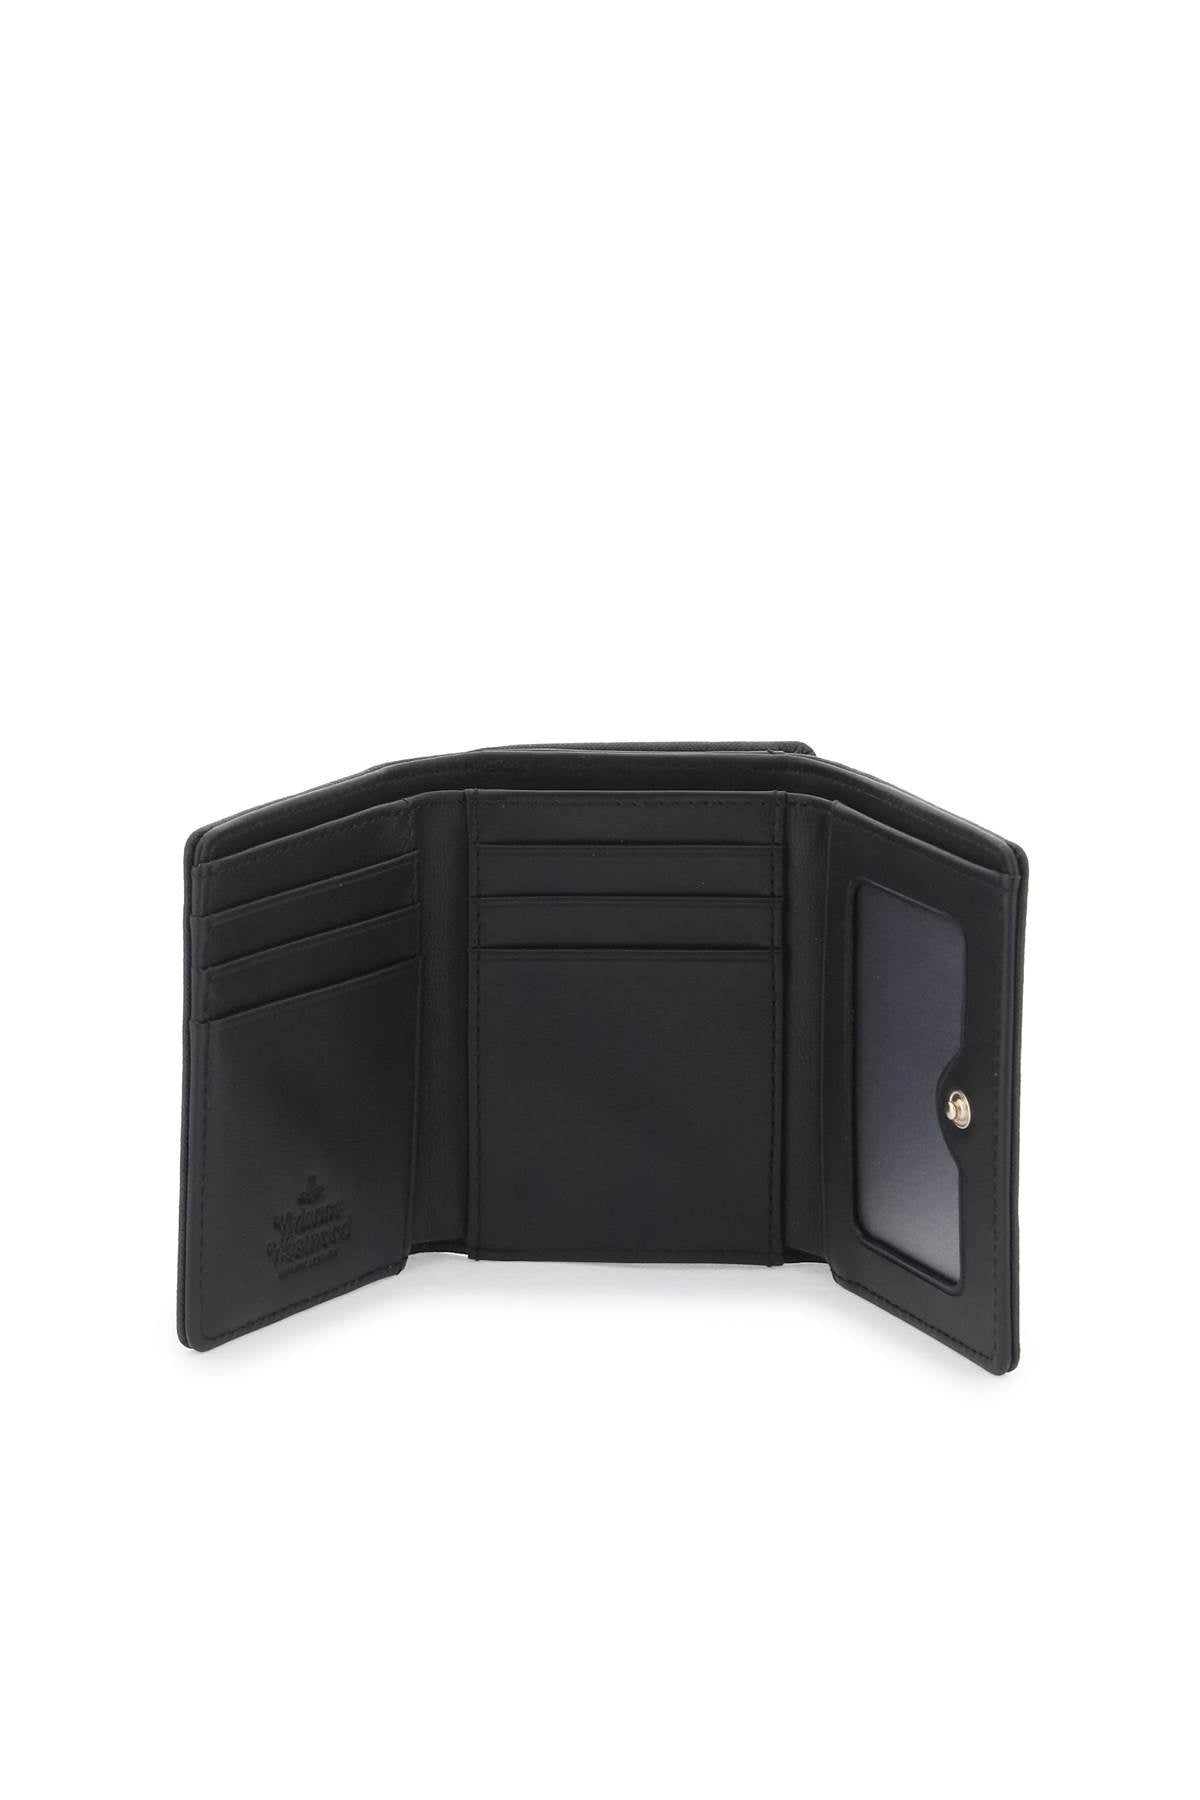 Vivienne Westwood Small Frame Saffiano Wallet   Black